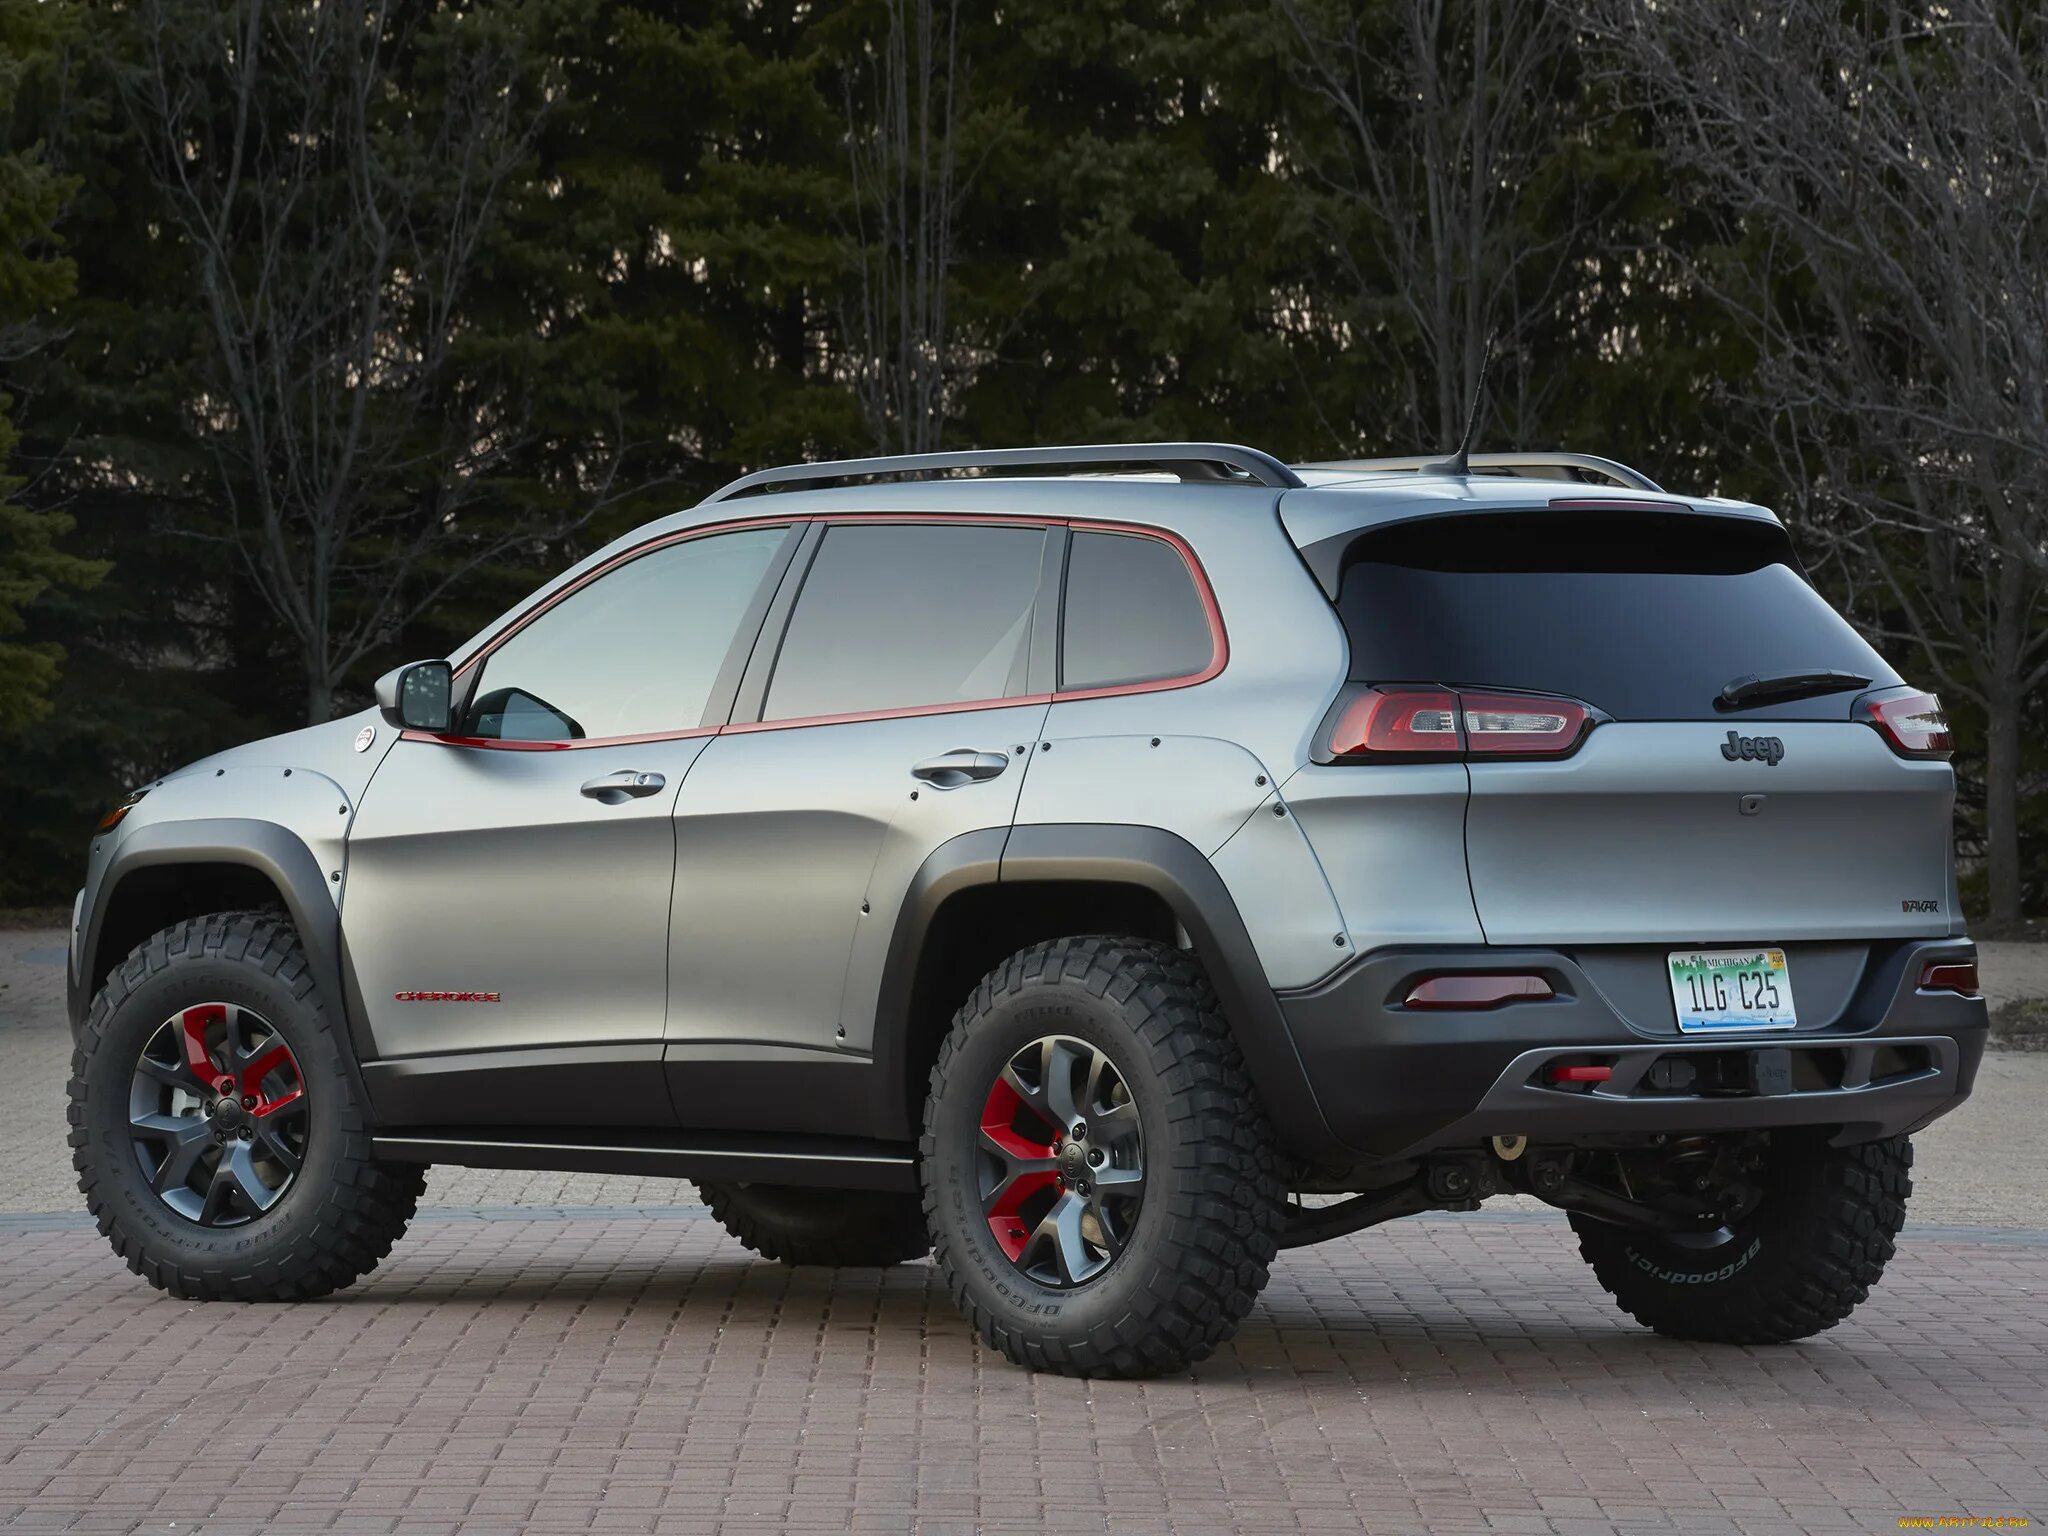 Jeep Grand Cherokee 2014 Lift. Jeep (джип) Trailhawk Concept. Jeep Cherokee 2014. Джип Гранд Чероки трейлхок.